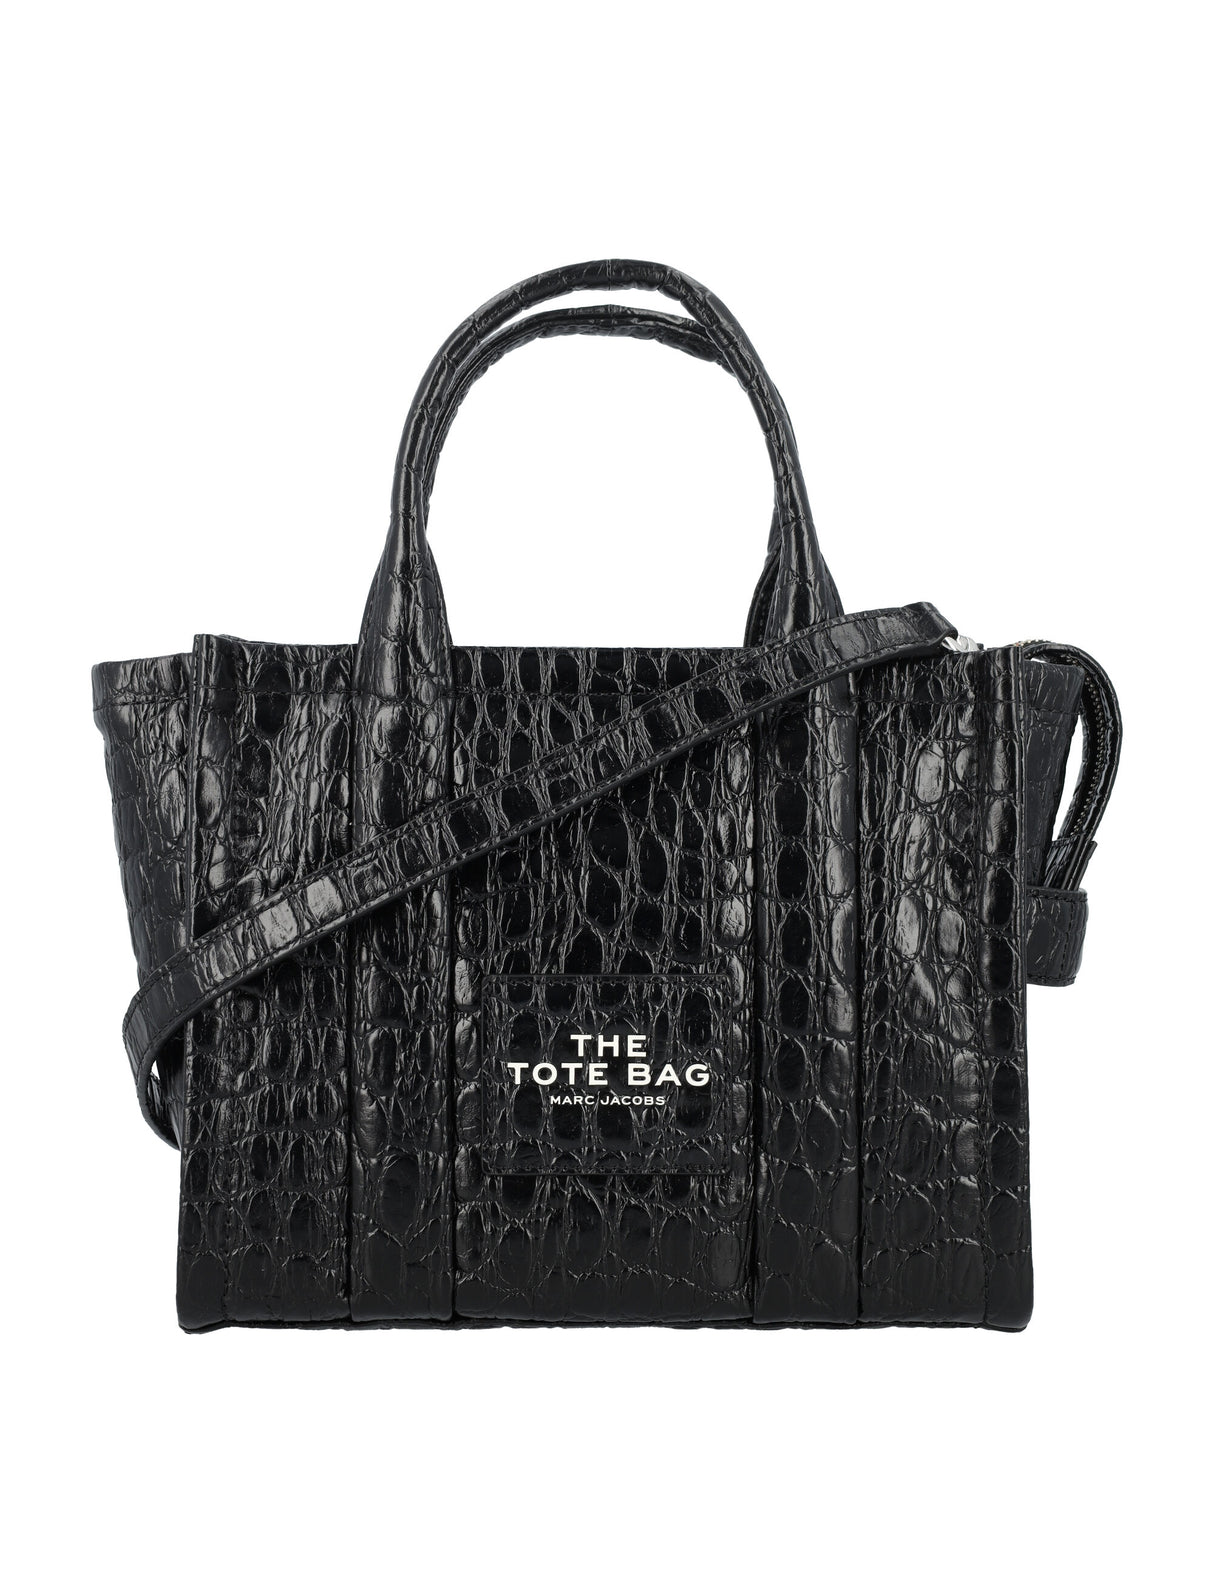 Black Croc-Embossed Leather Tote Handbag for Women by Designer Marc Jacobs